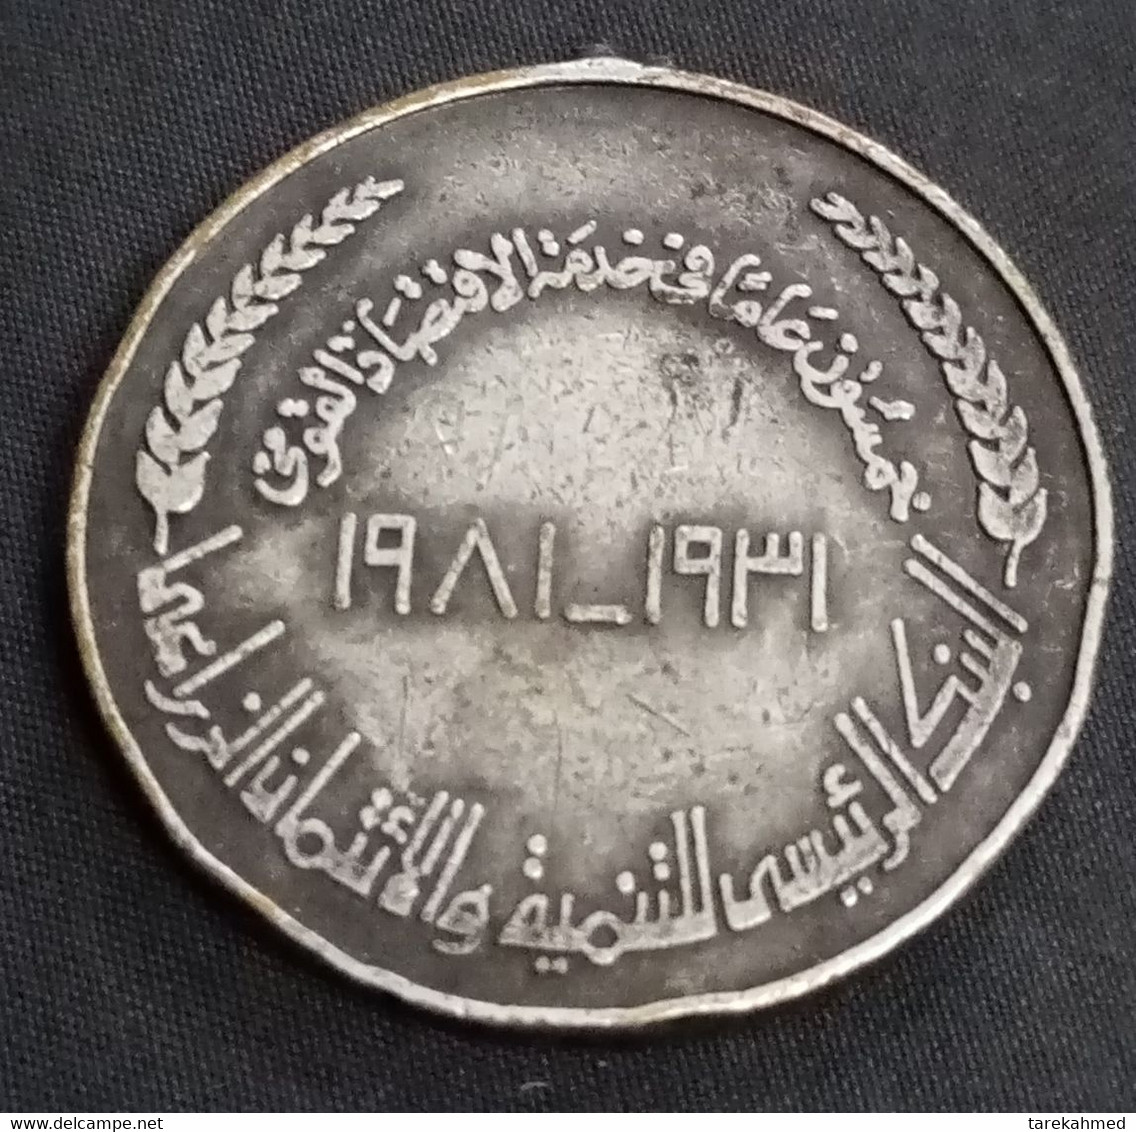 Egypt 1981 , Medal Of Principal Bank For Development & Agricultural , Tokbag - Professionnels / De Société